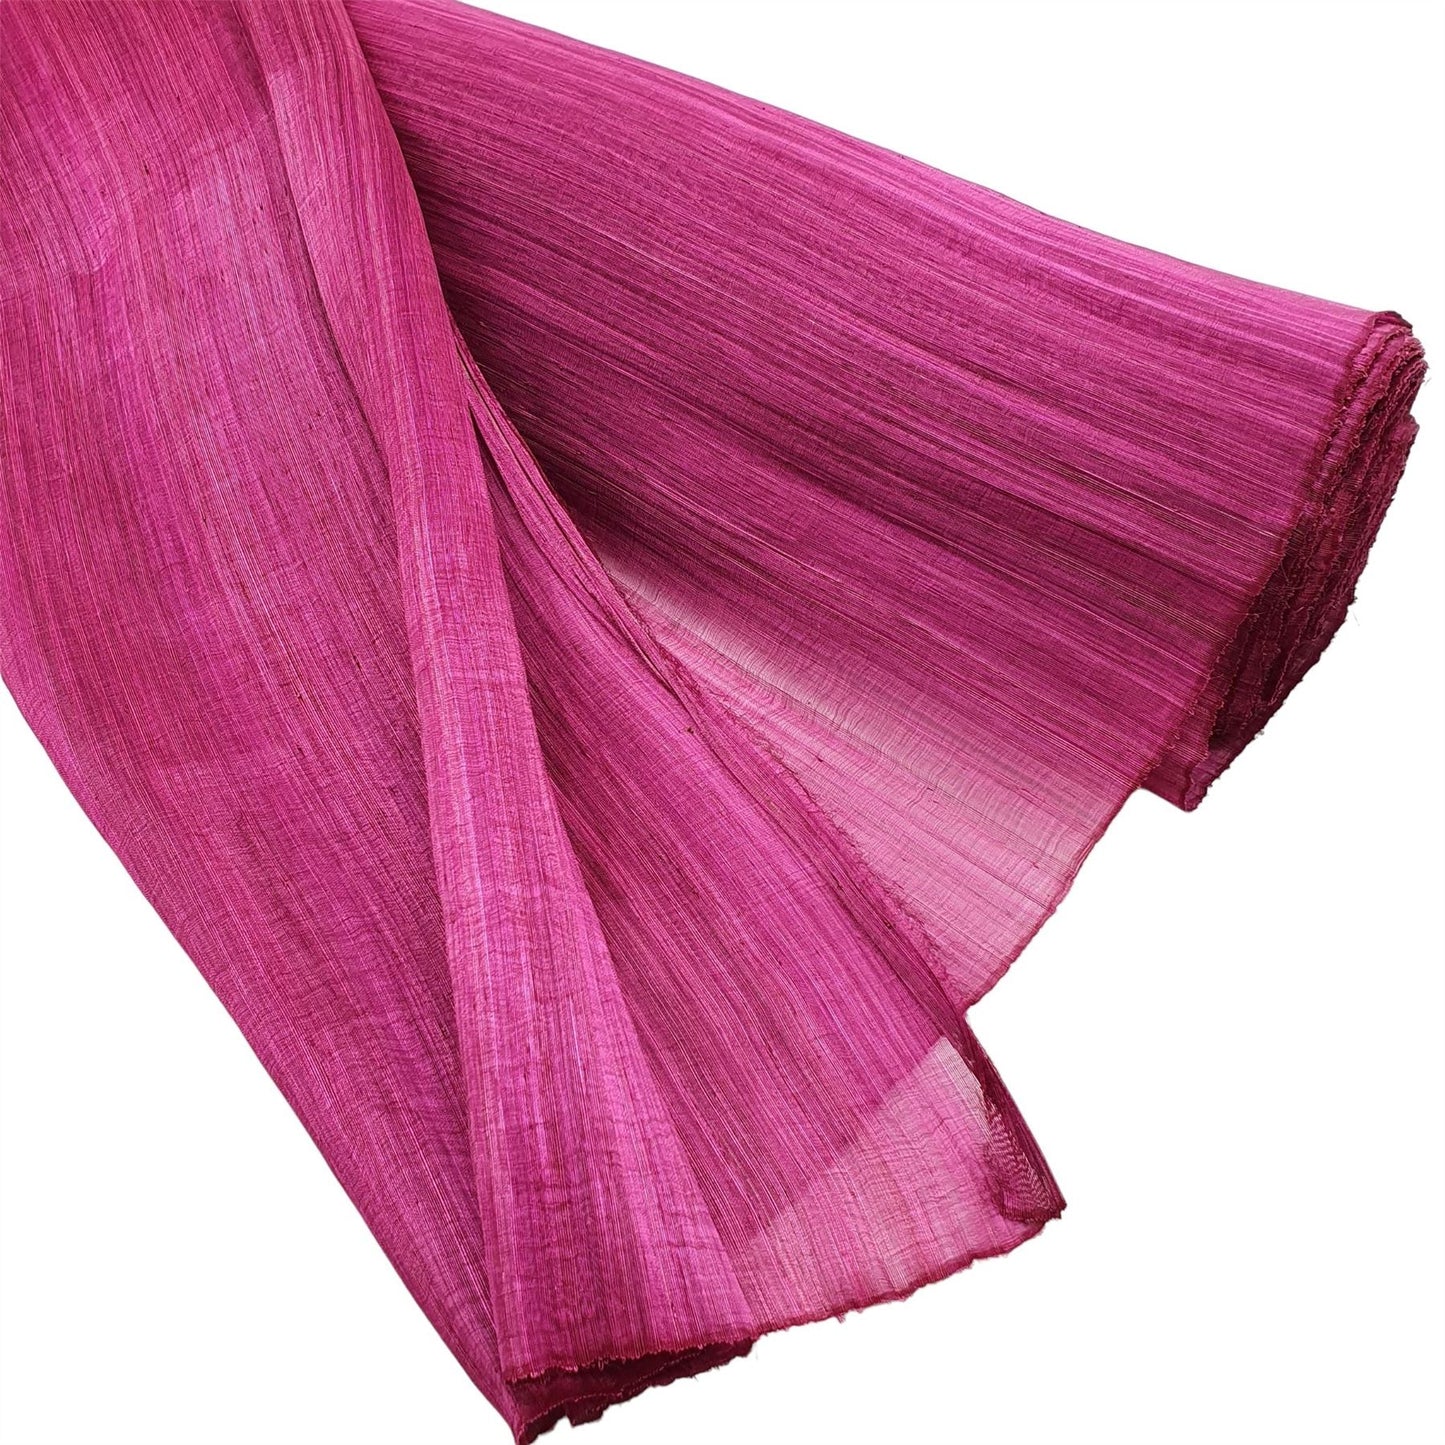 Silk Abaca Fabric 75cm to 90m x 0.5m FS005